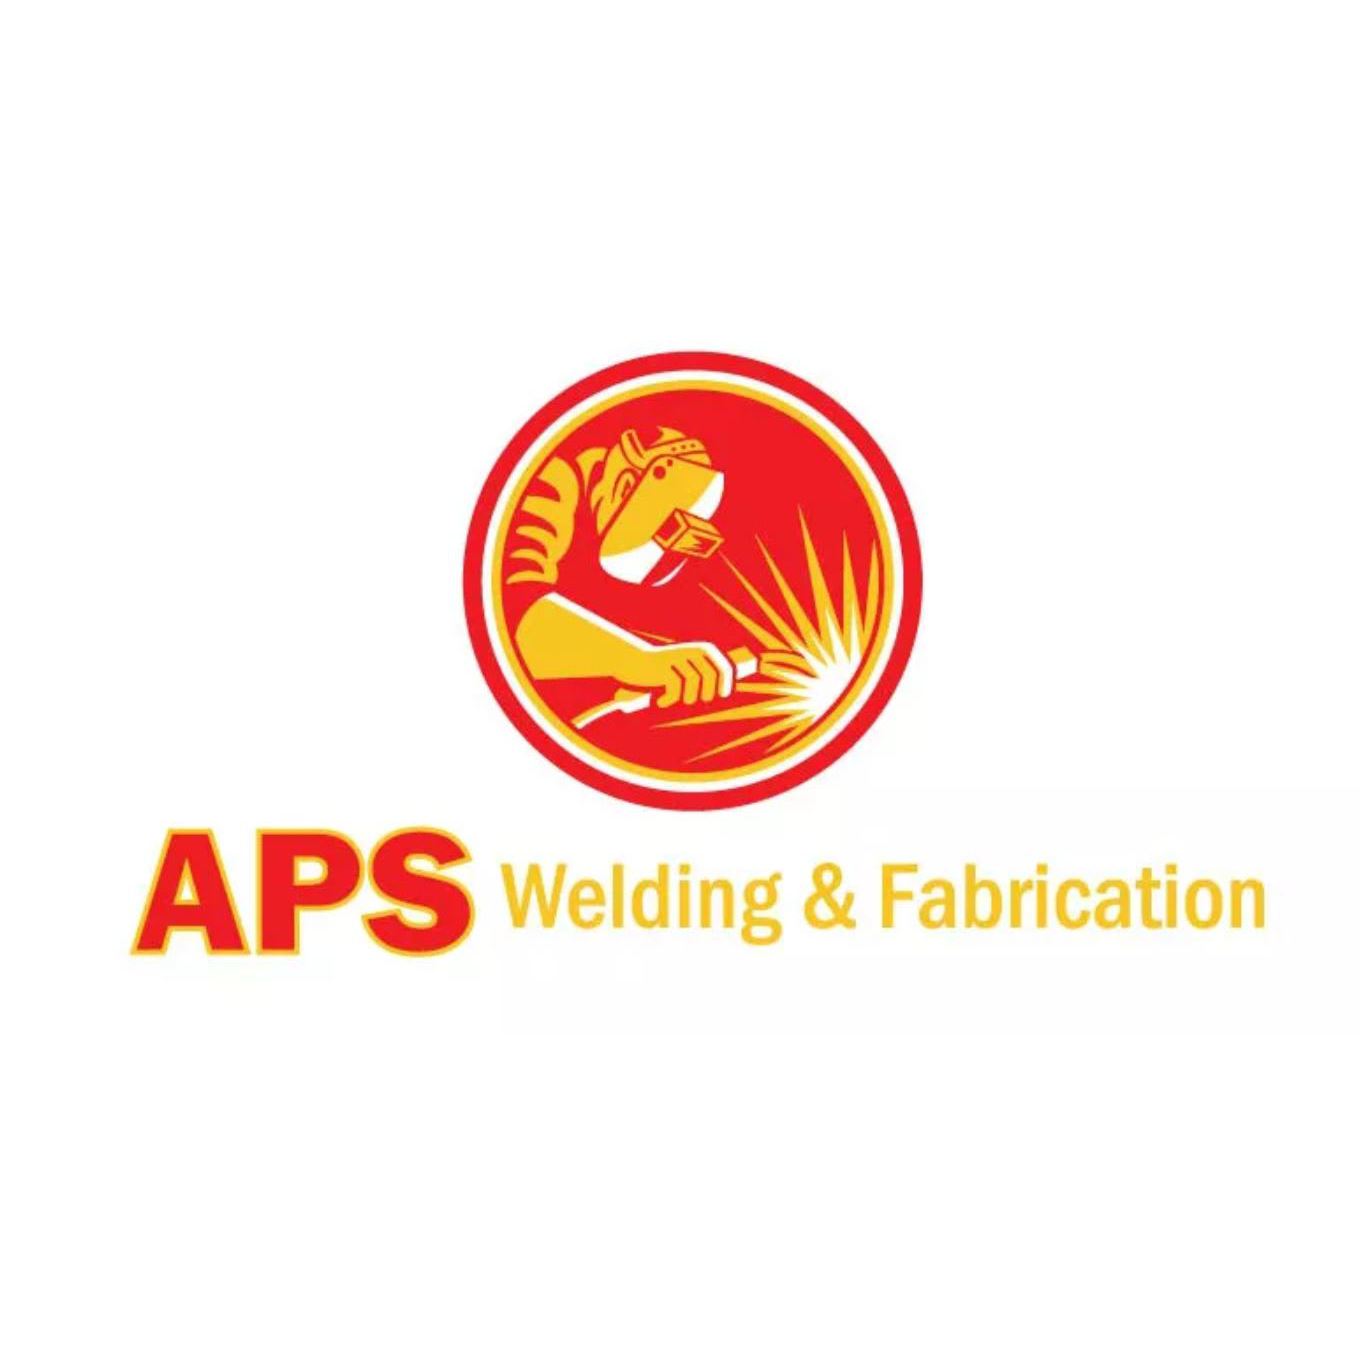 A.P.S Welding & Fabrication Services Ltd - Southampton, Hampshire SO31 5QA - 02380 866008 | ShowMeLocal.com